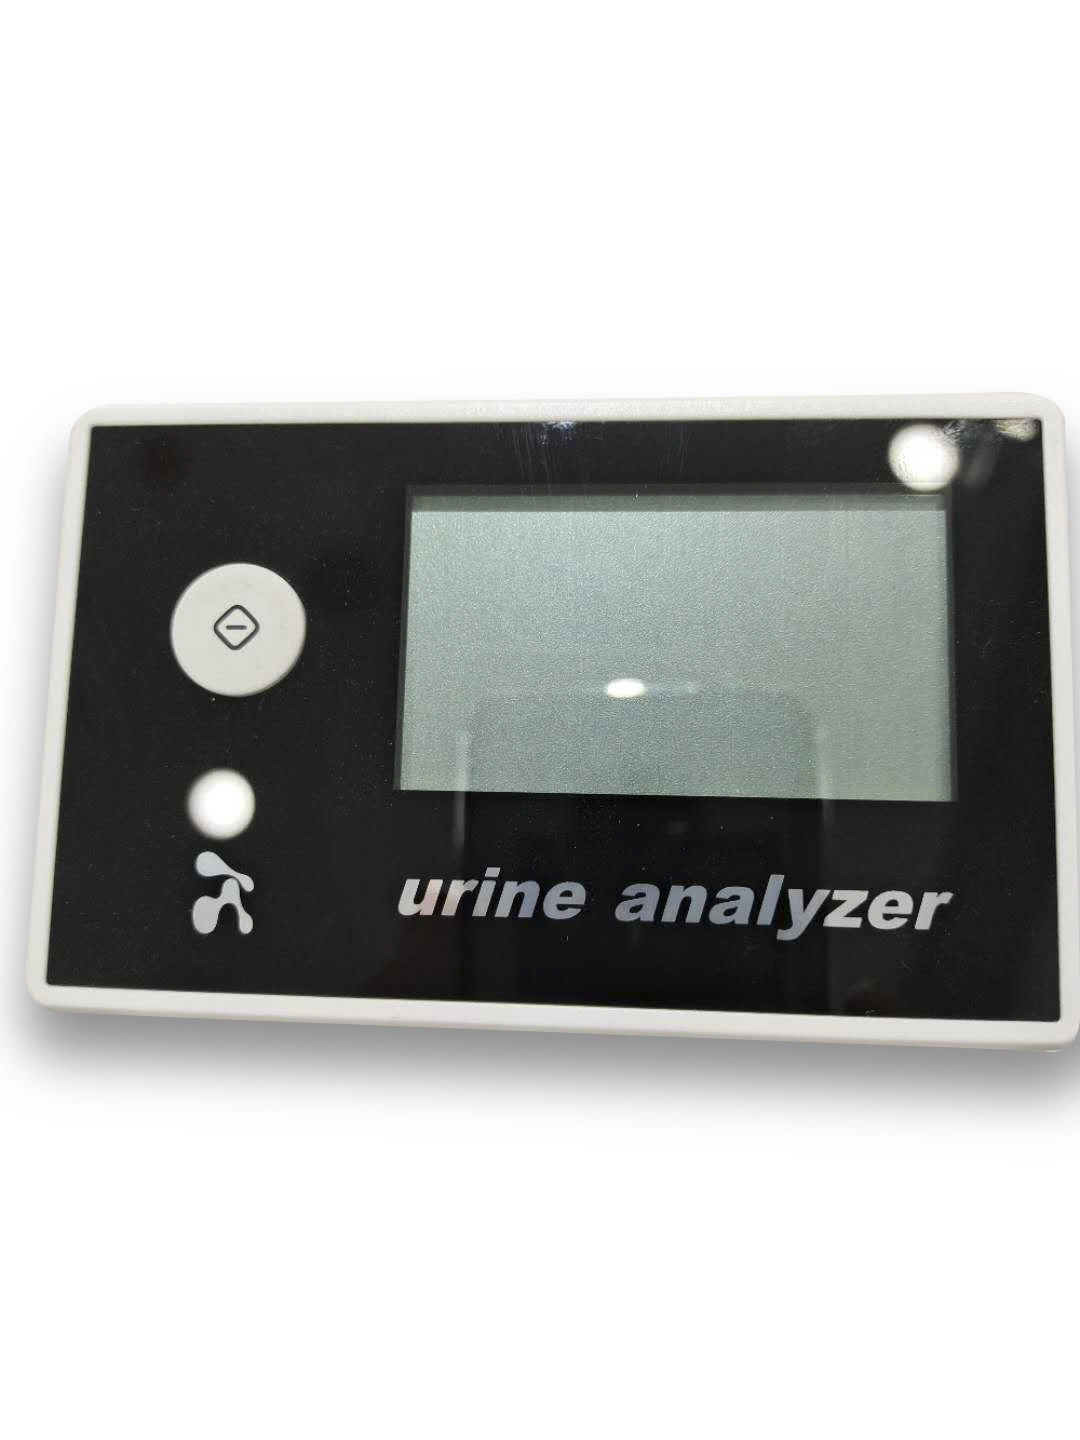 Hcu01-7 ultraportátil de alta calidad Analizador de orina médicos